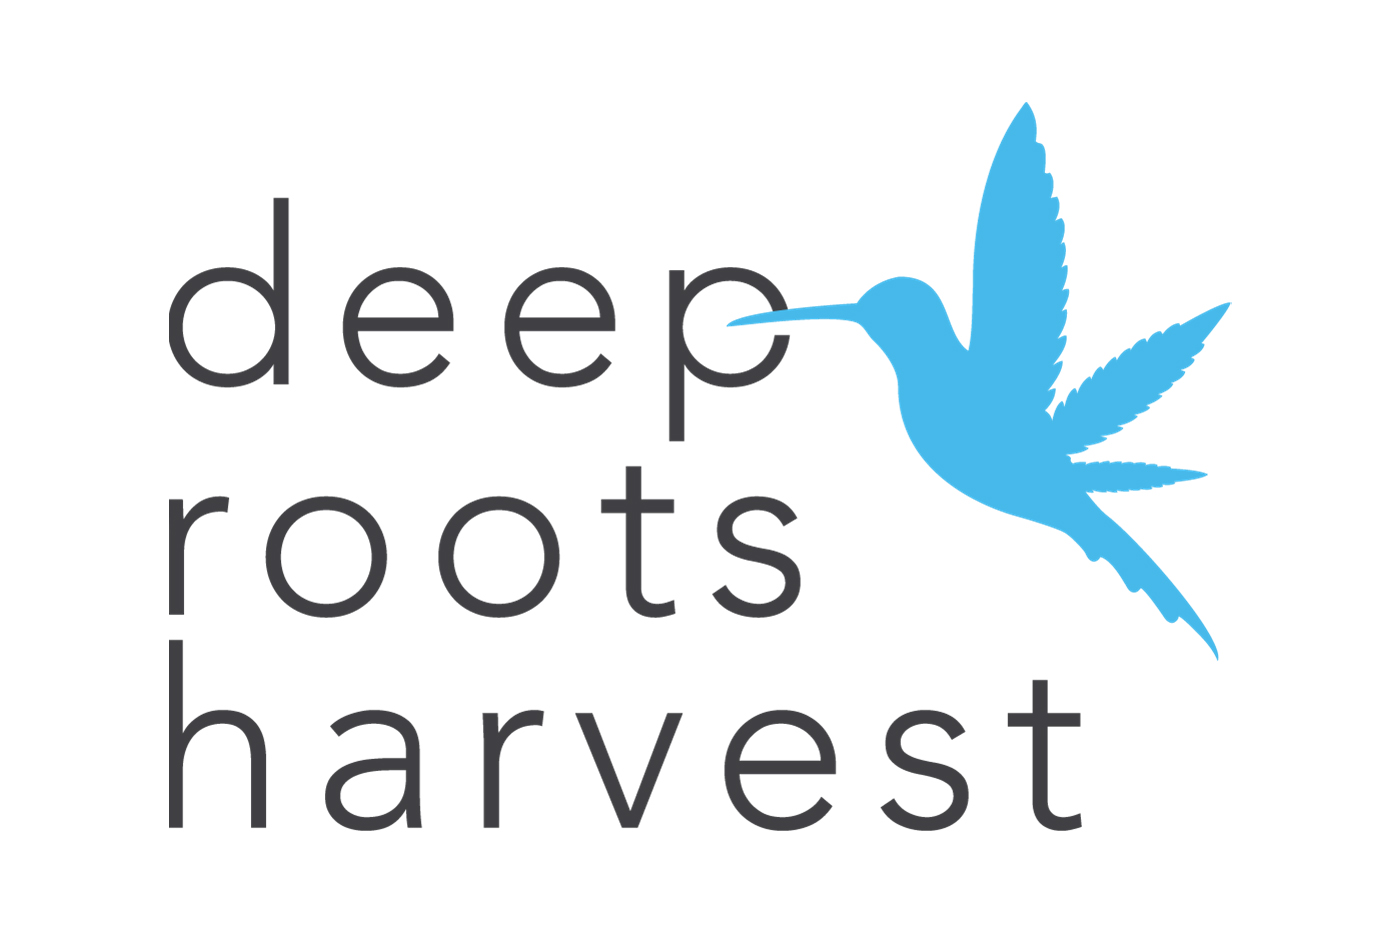 Nevada cannabis operator Deep Roots Harvest names James Mao as Director of Marketing